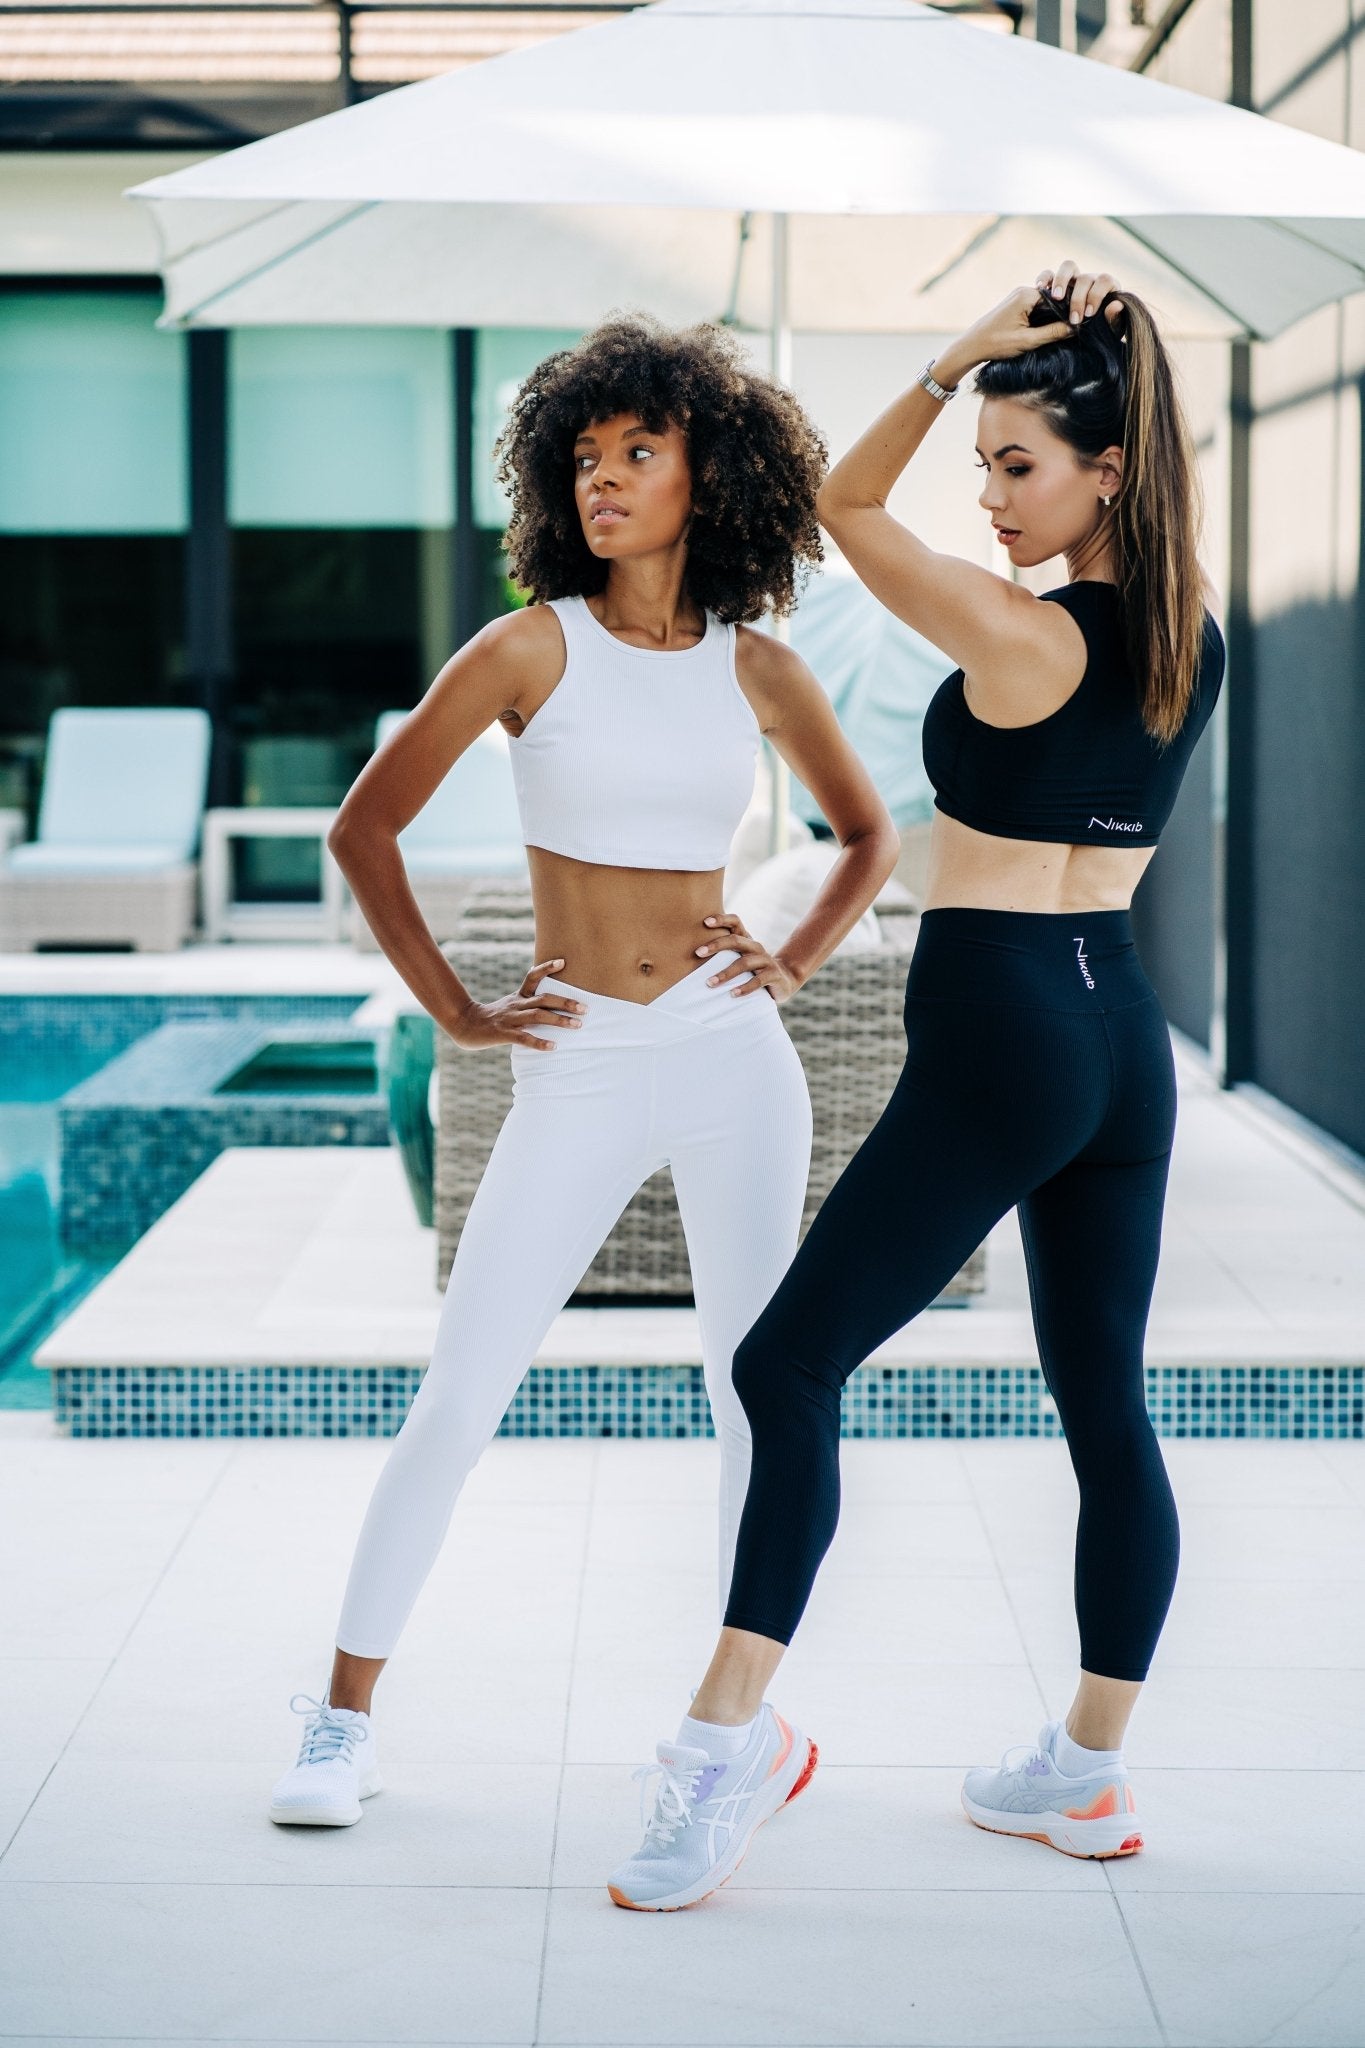 Sportswear Leggings yoga pant capri activewear – Nikkib Sportswear